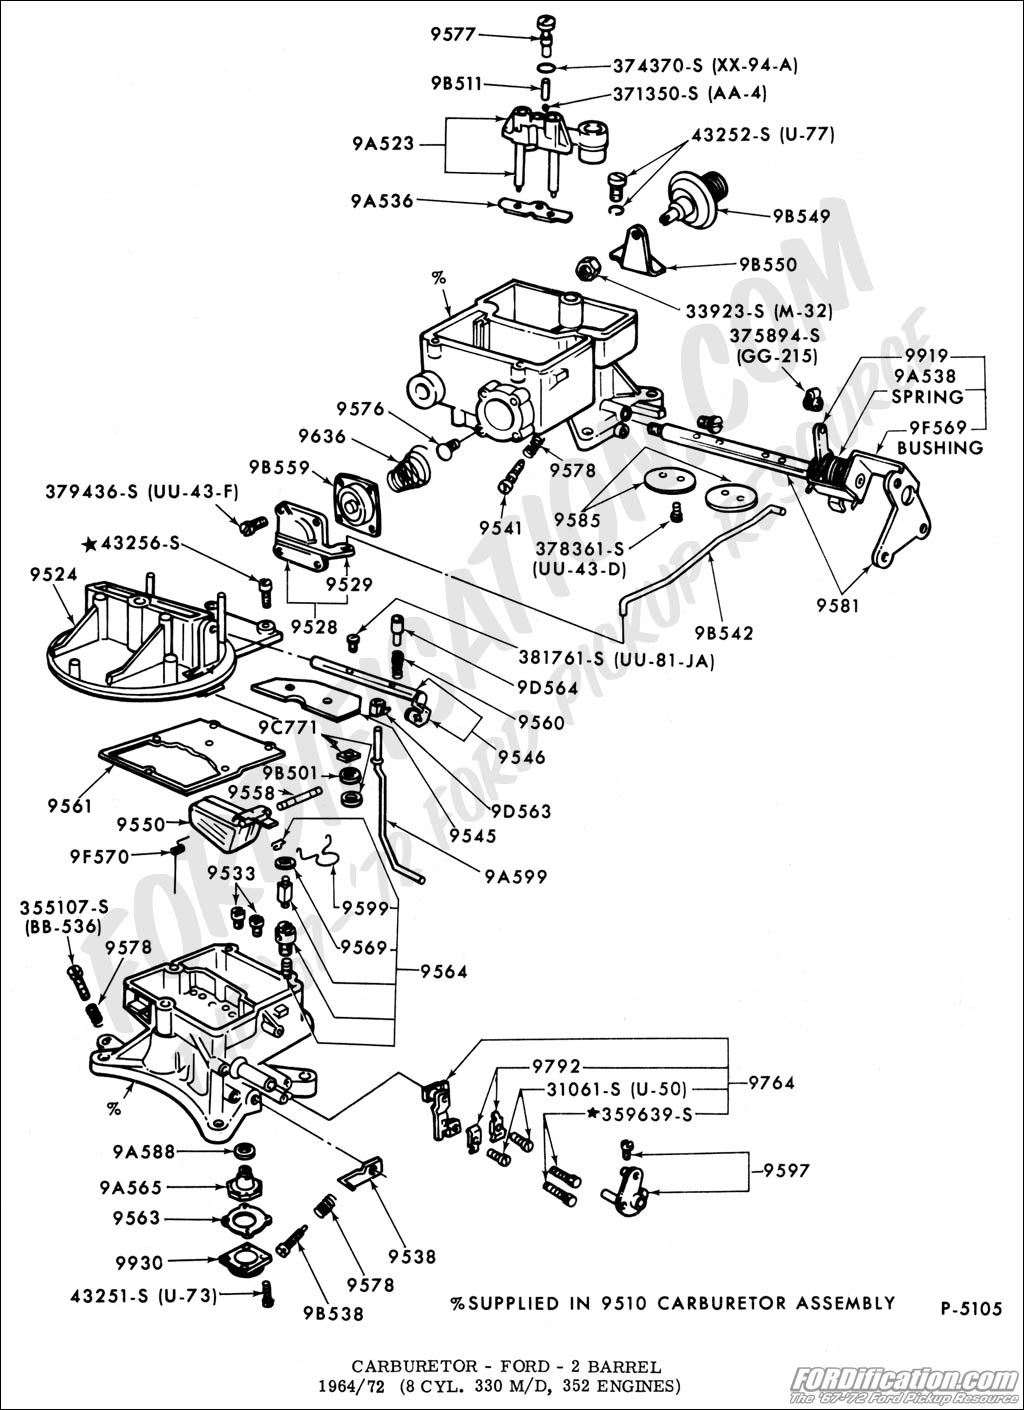 1972 Ford f100 carburetor diagram